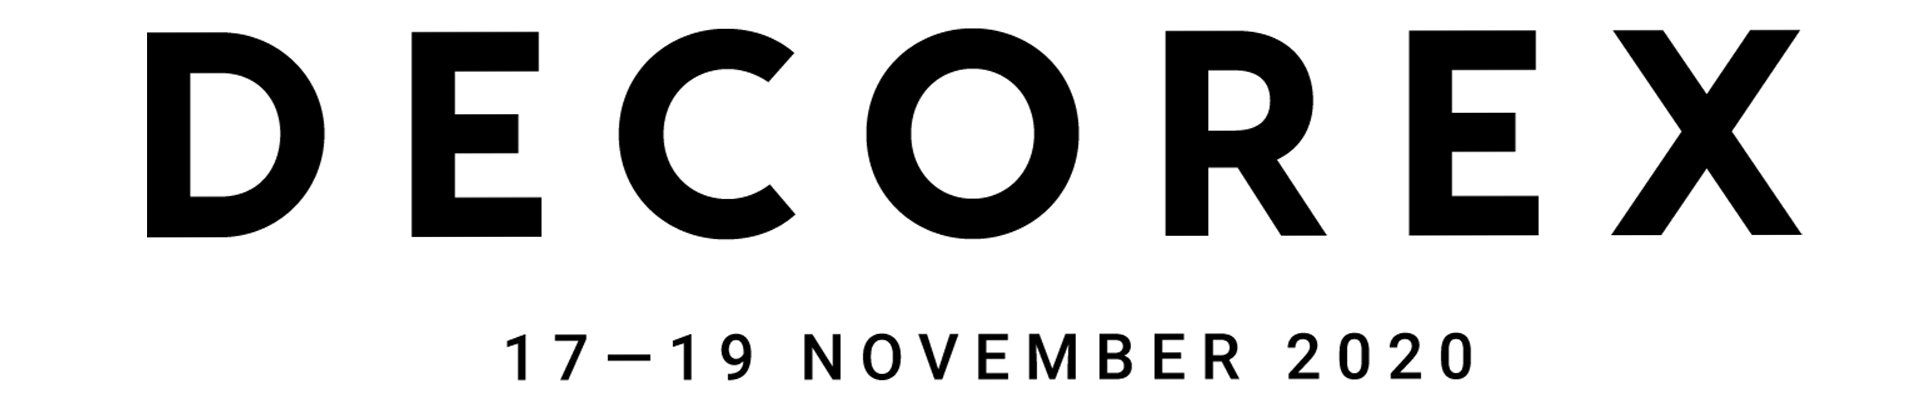 Decorex 2020 Logo